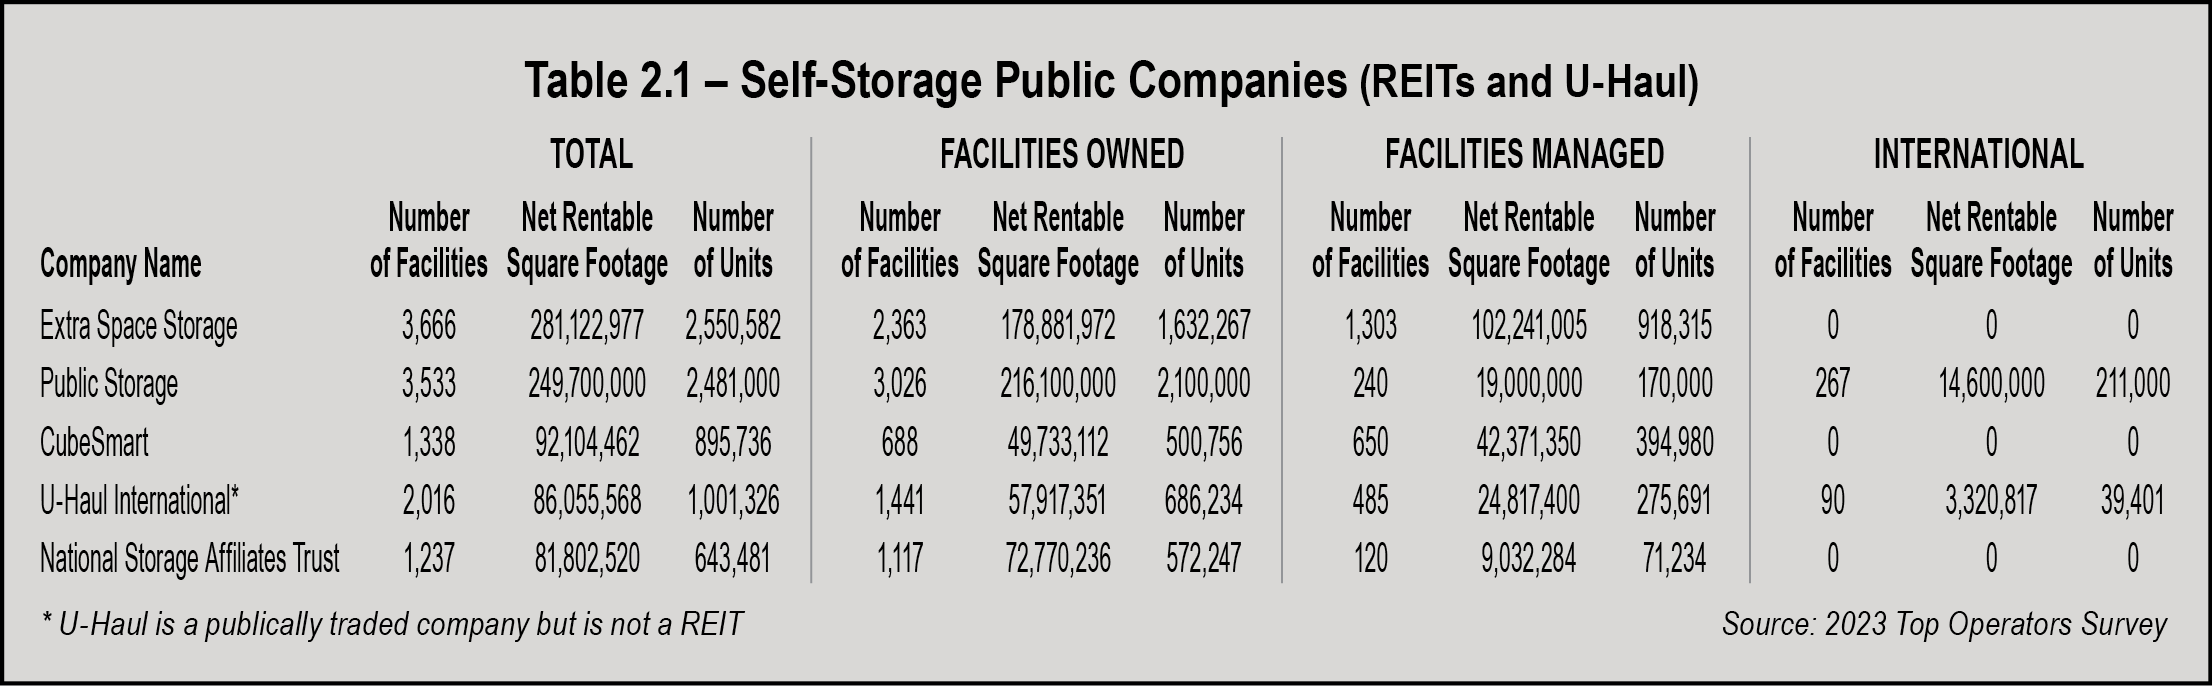 Table 2.1 – Self-Storage Public Companies (REITs and U-Haul)